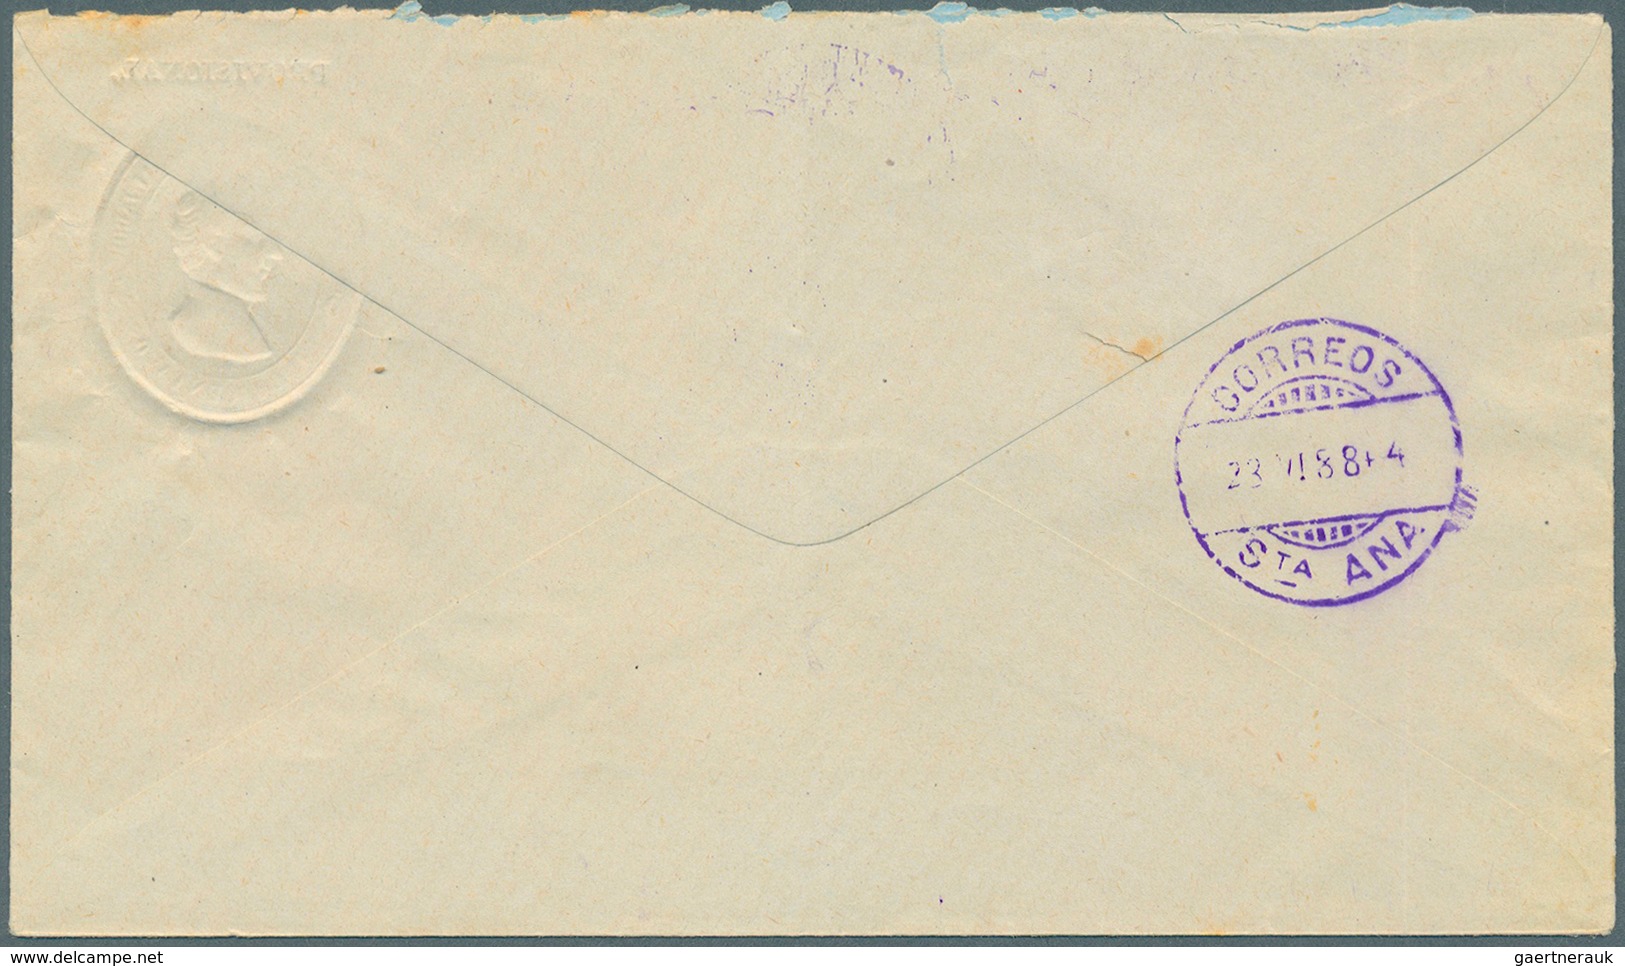 El Salvador - Ganzsachen: 1888, Stationery Envelopes 5 C "PROVISIONAL" In Two Different Paper Colour - El Salvador